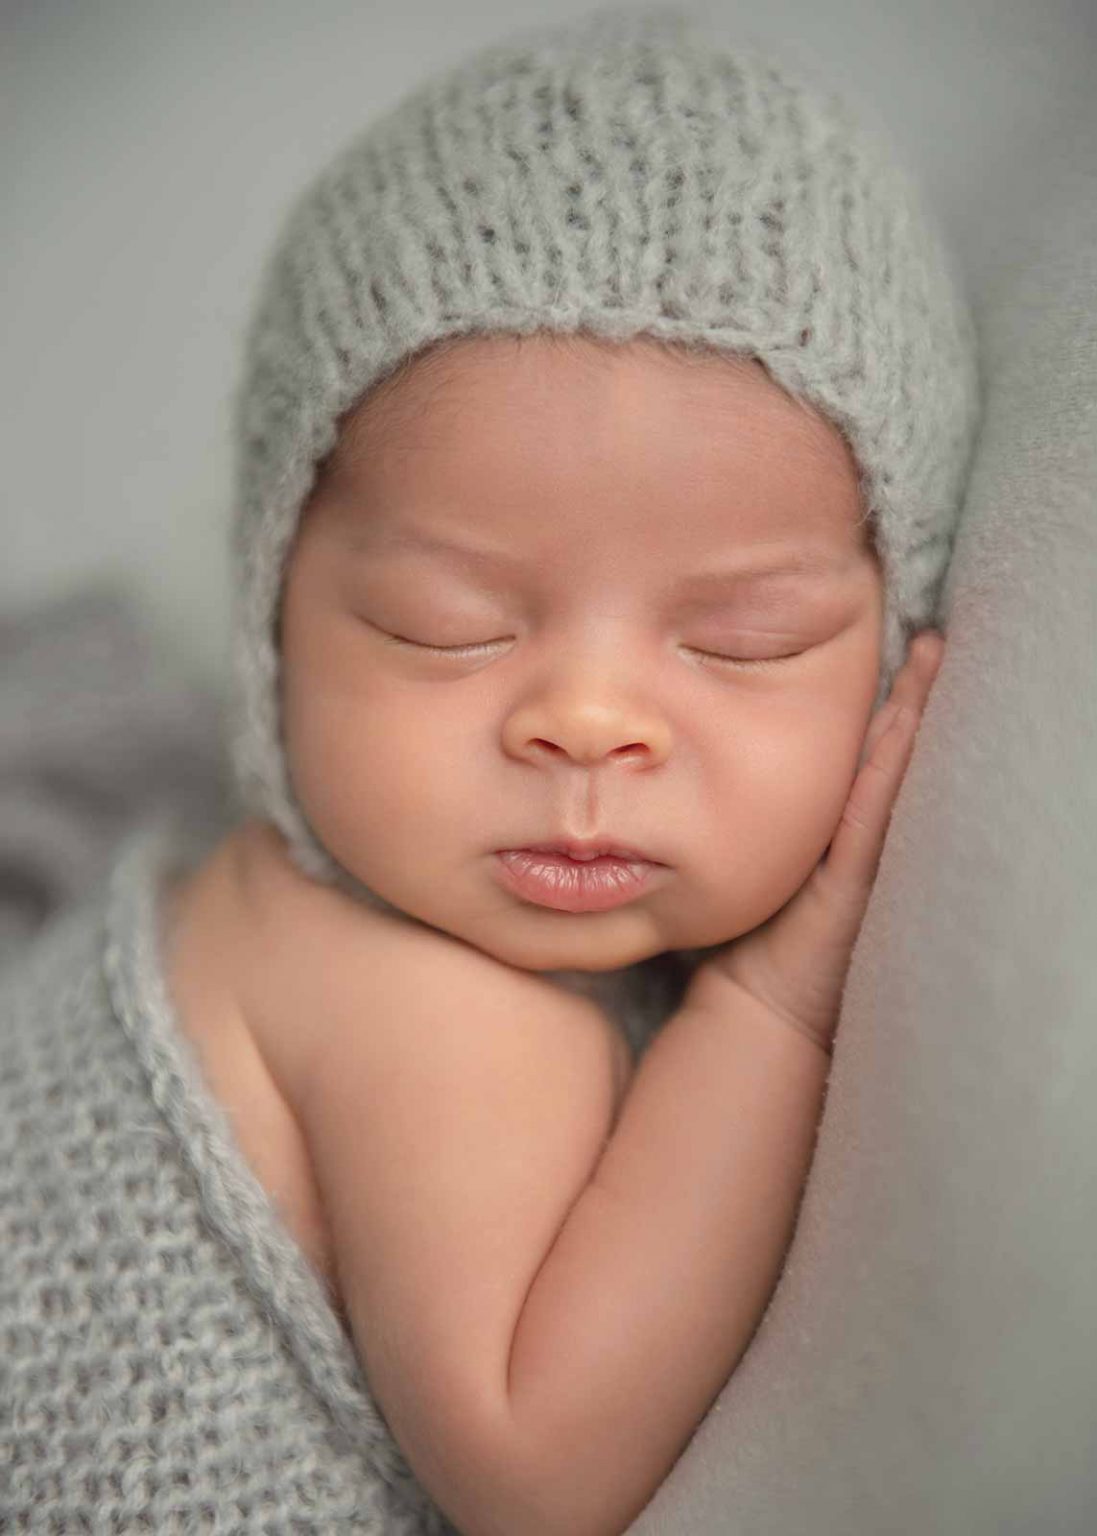 Adorable newborn boy sleeping at a photo studio